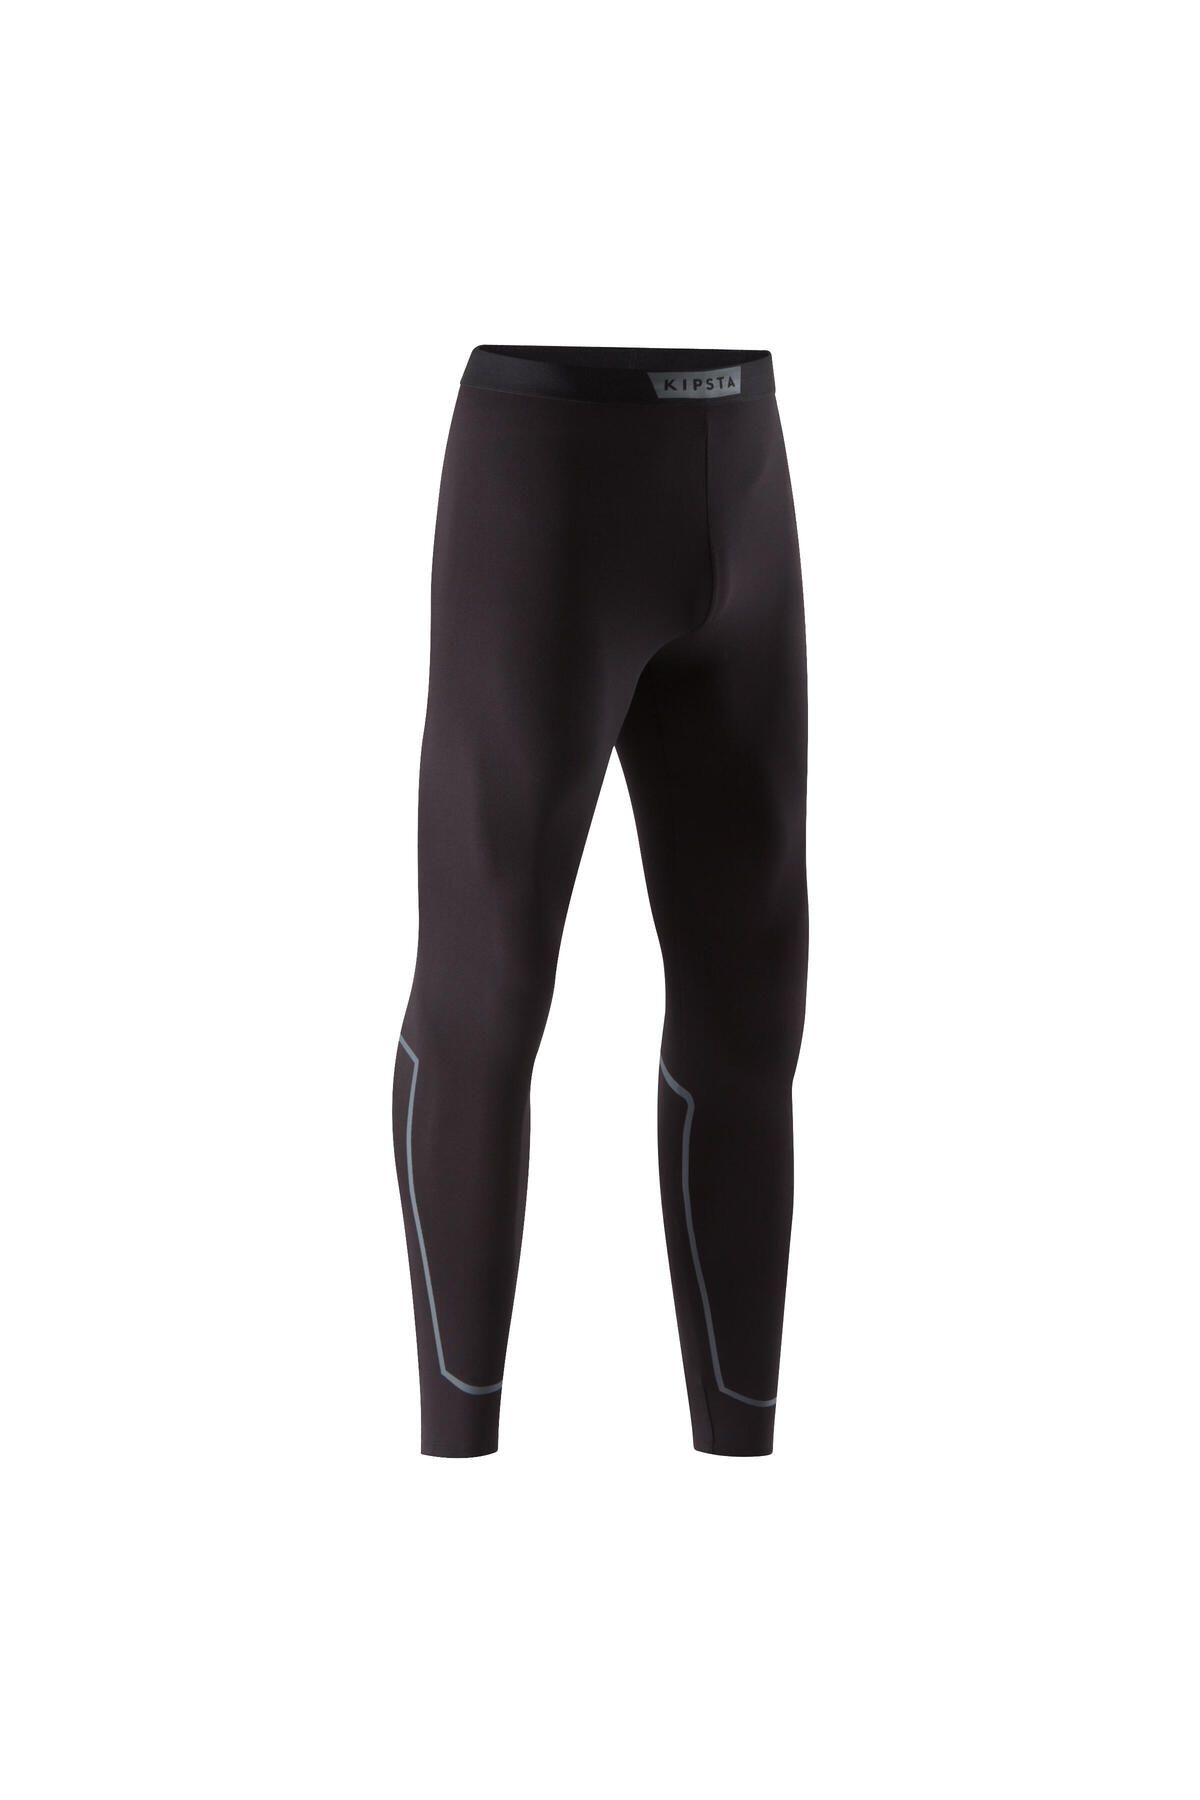 Decathlon Adult Football Leggings Underwear - Black - Keepconfort